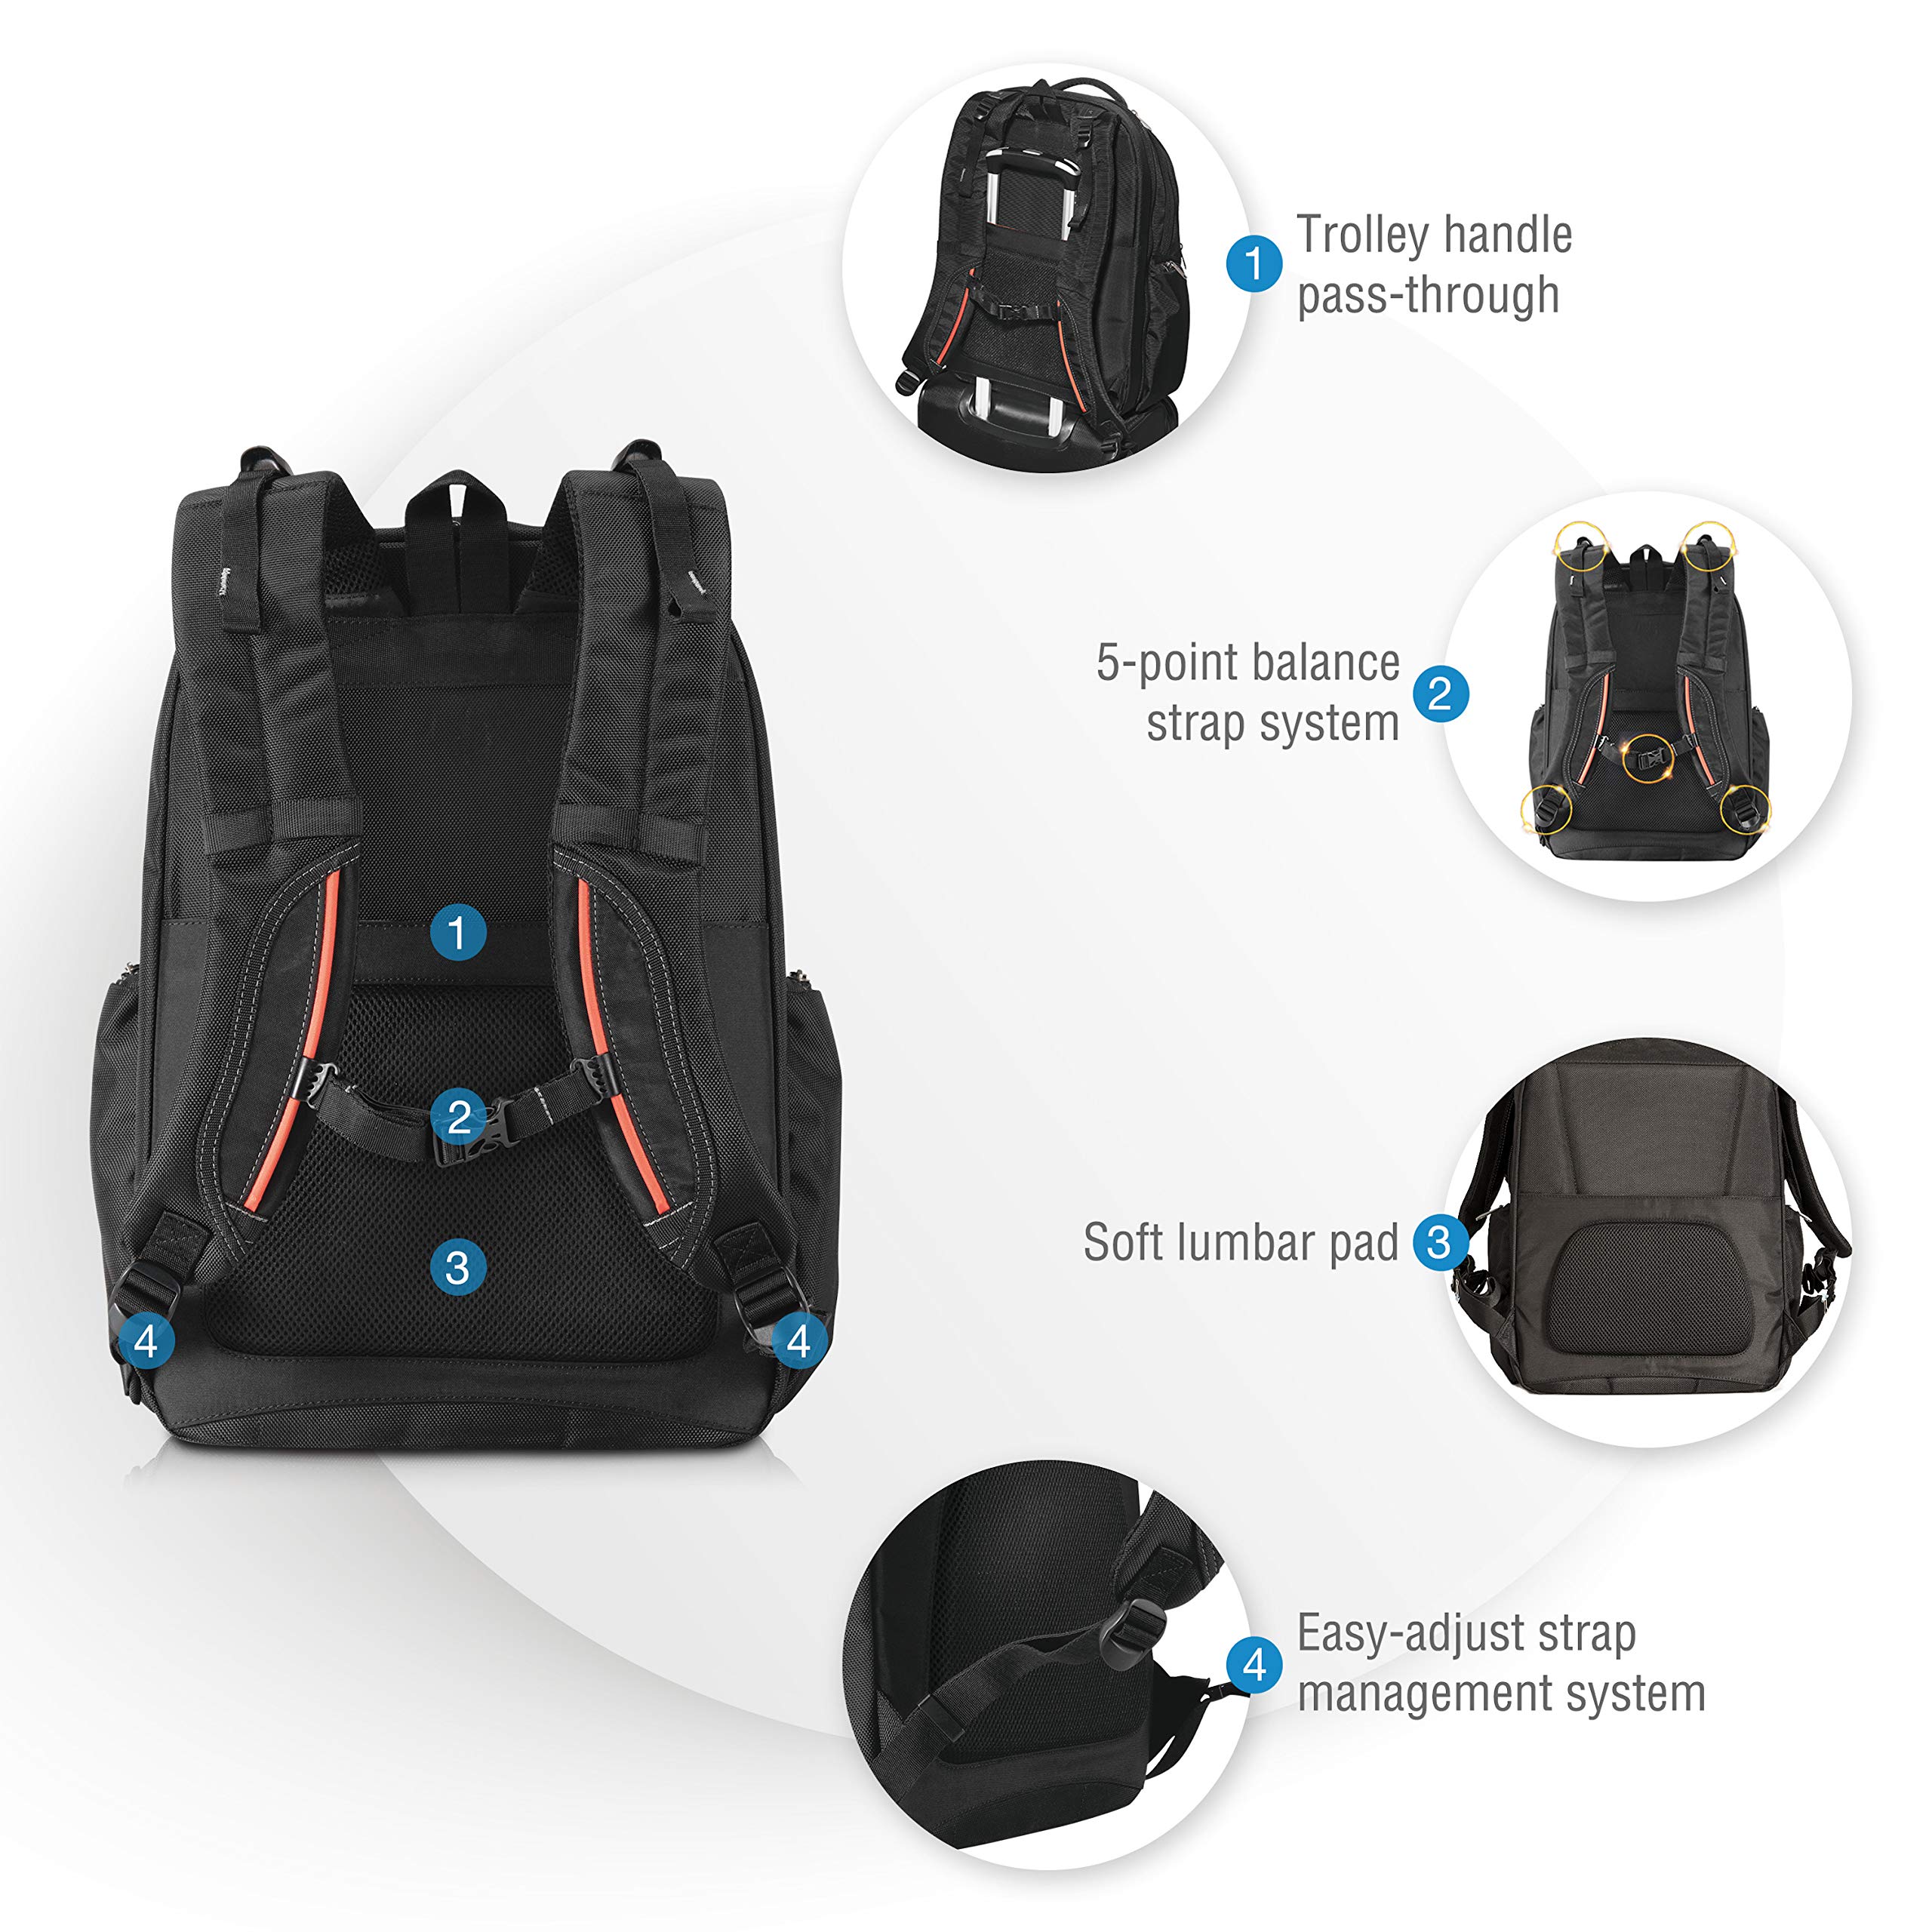 EVERKI Atlas Business Laptop Backpack, 13-Inch to 17.3-Inch Adjustable Compartment, Men or Women, Travel Friendly (EKP121), Black